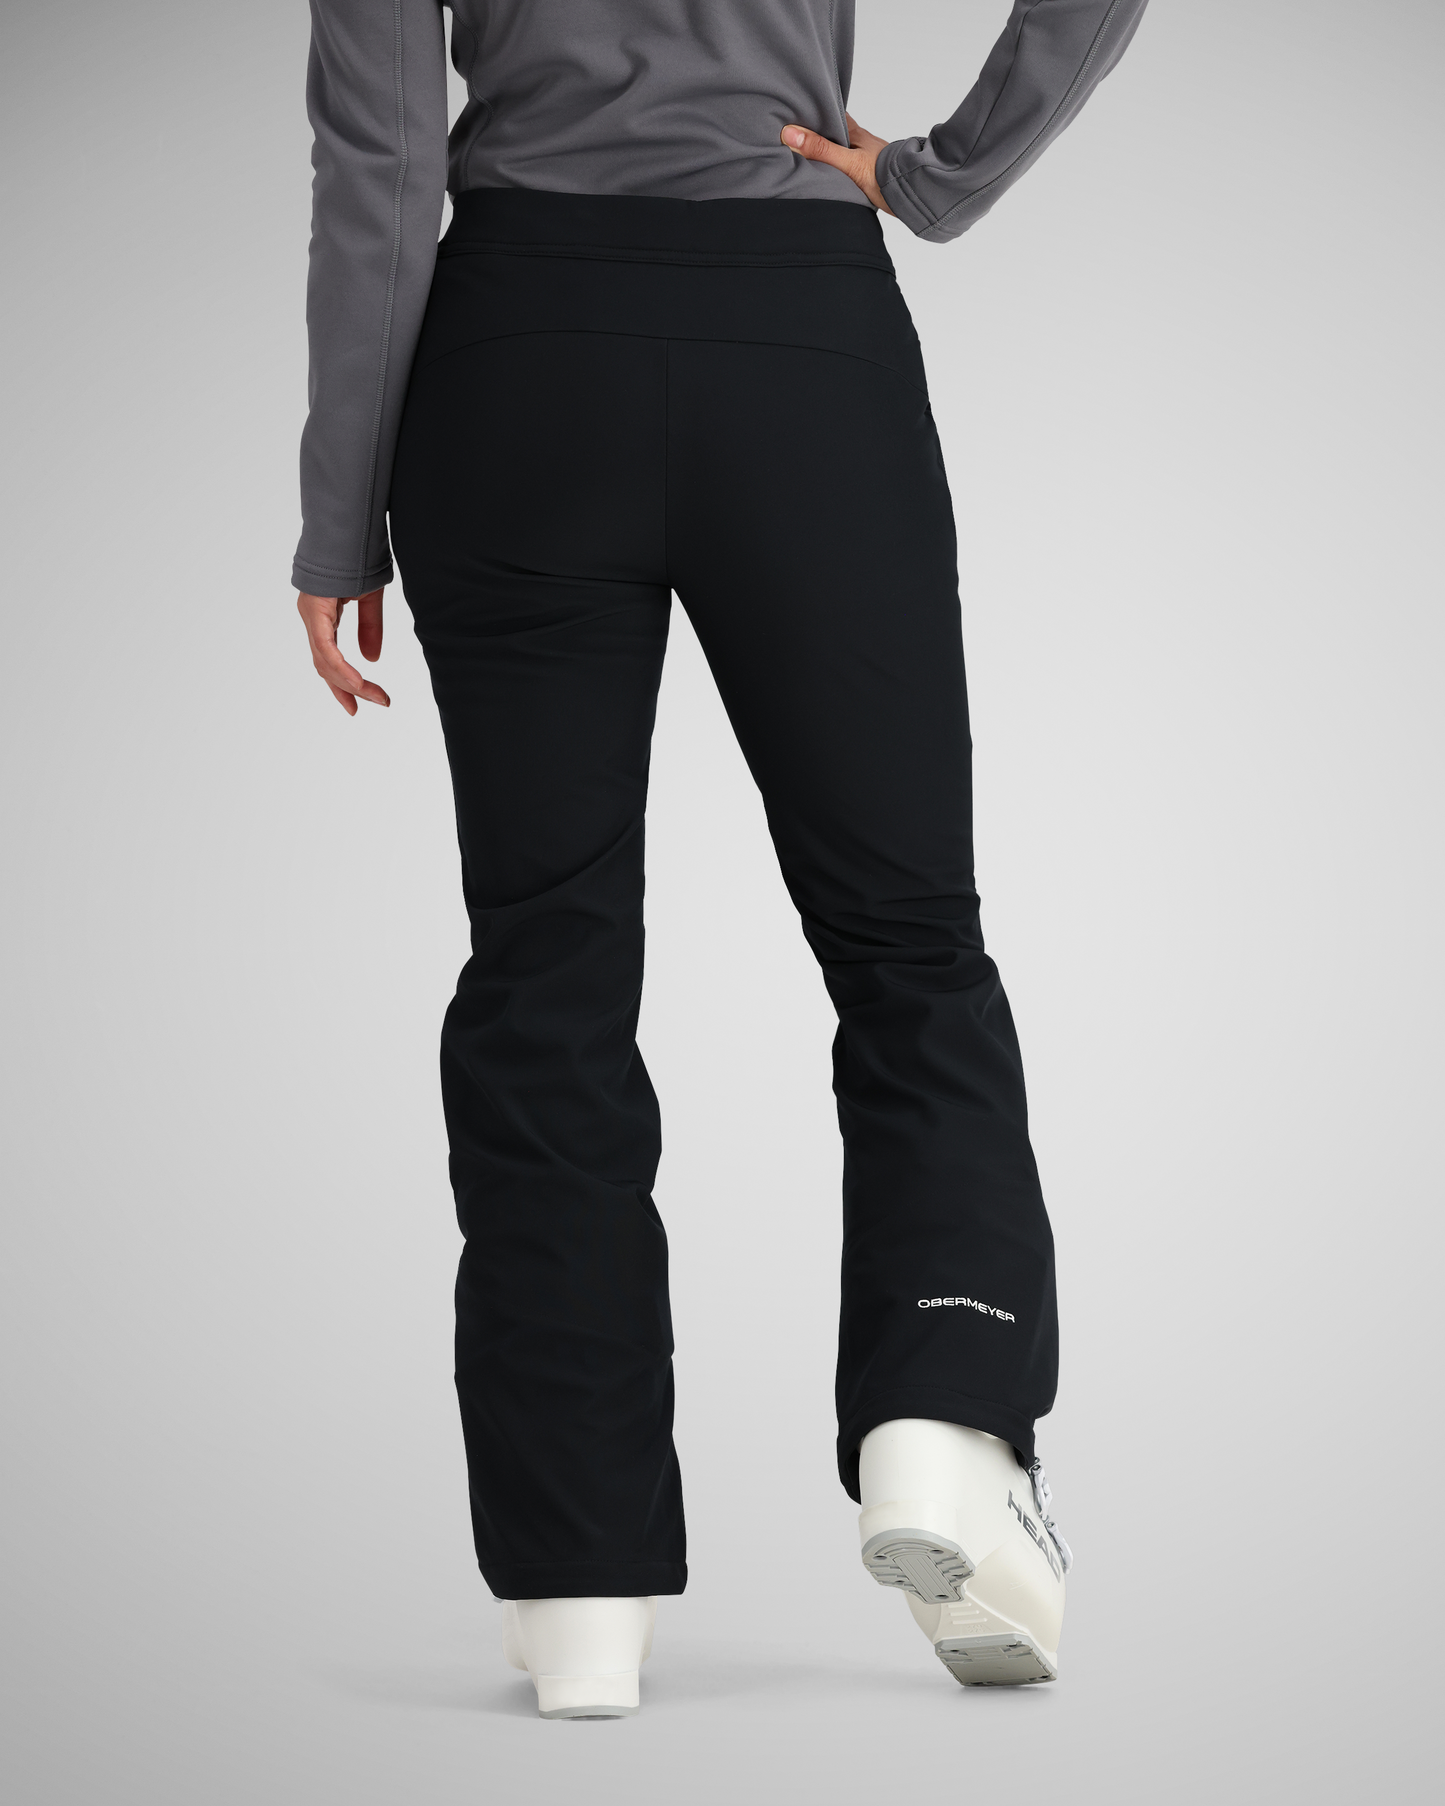 NILS Sportswear Womans Size 4 Ski Snow Pants Insulated Black RN